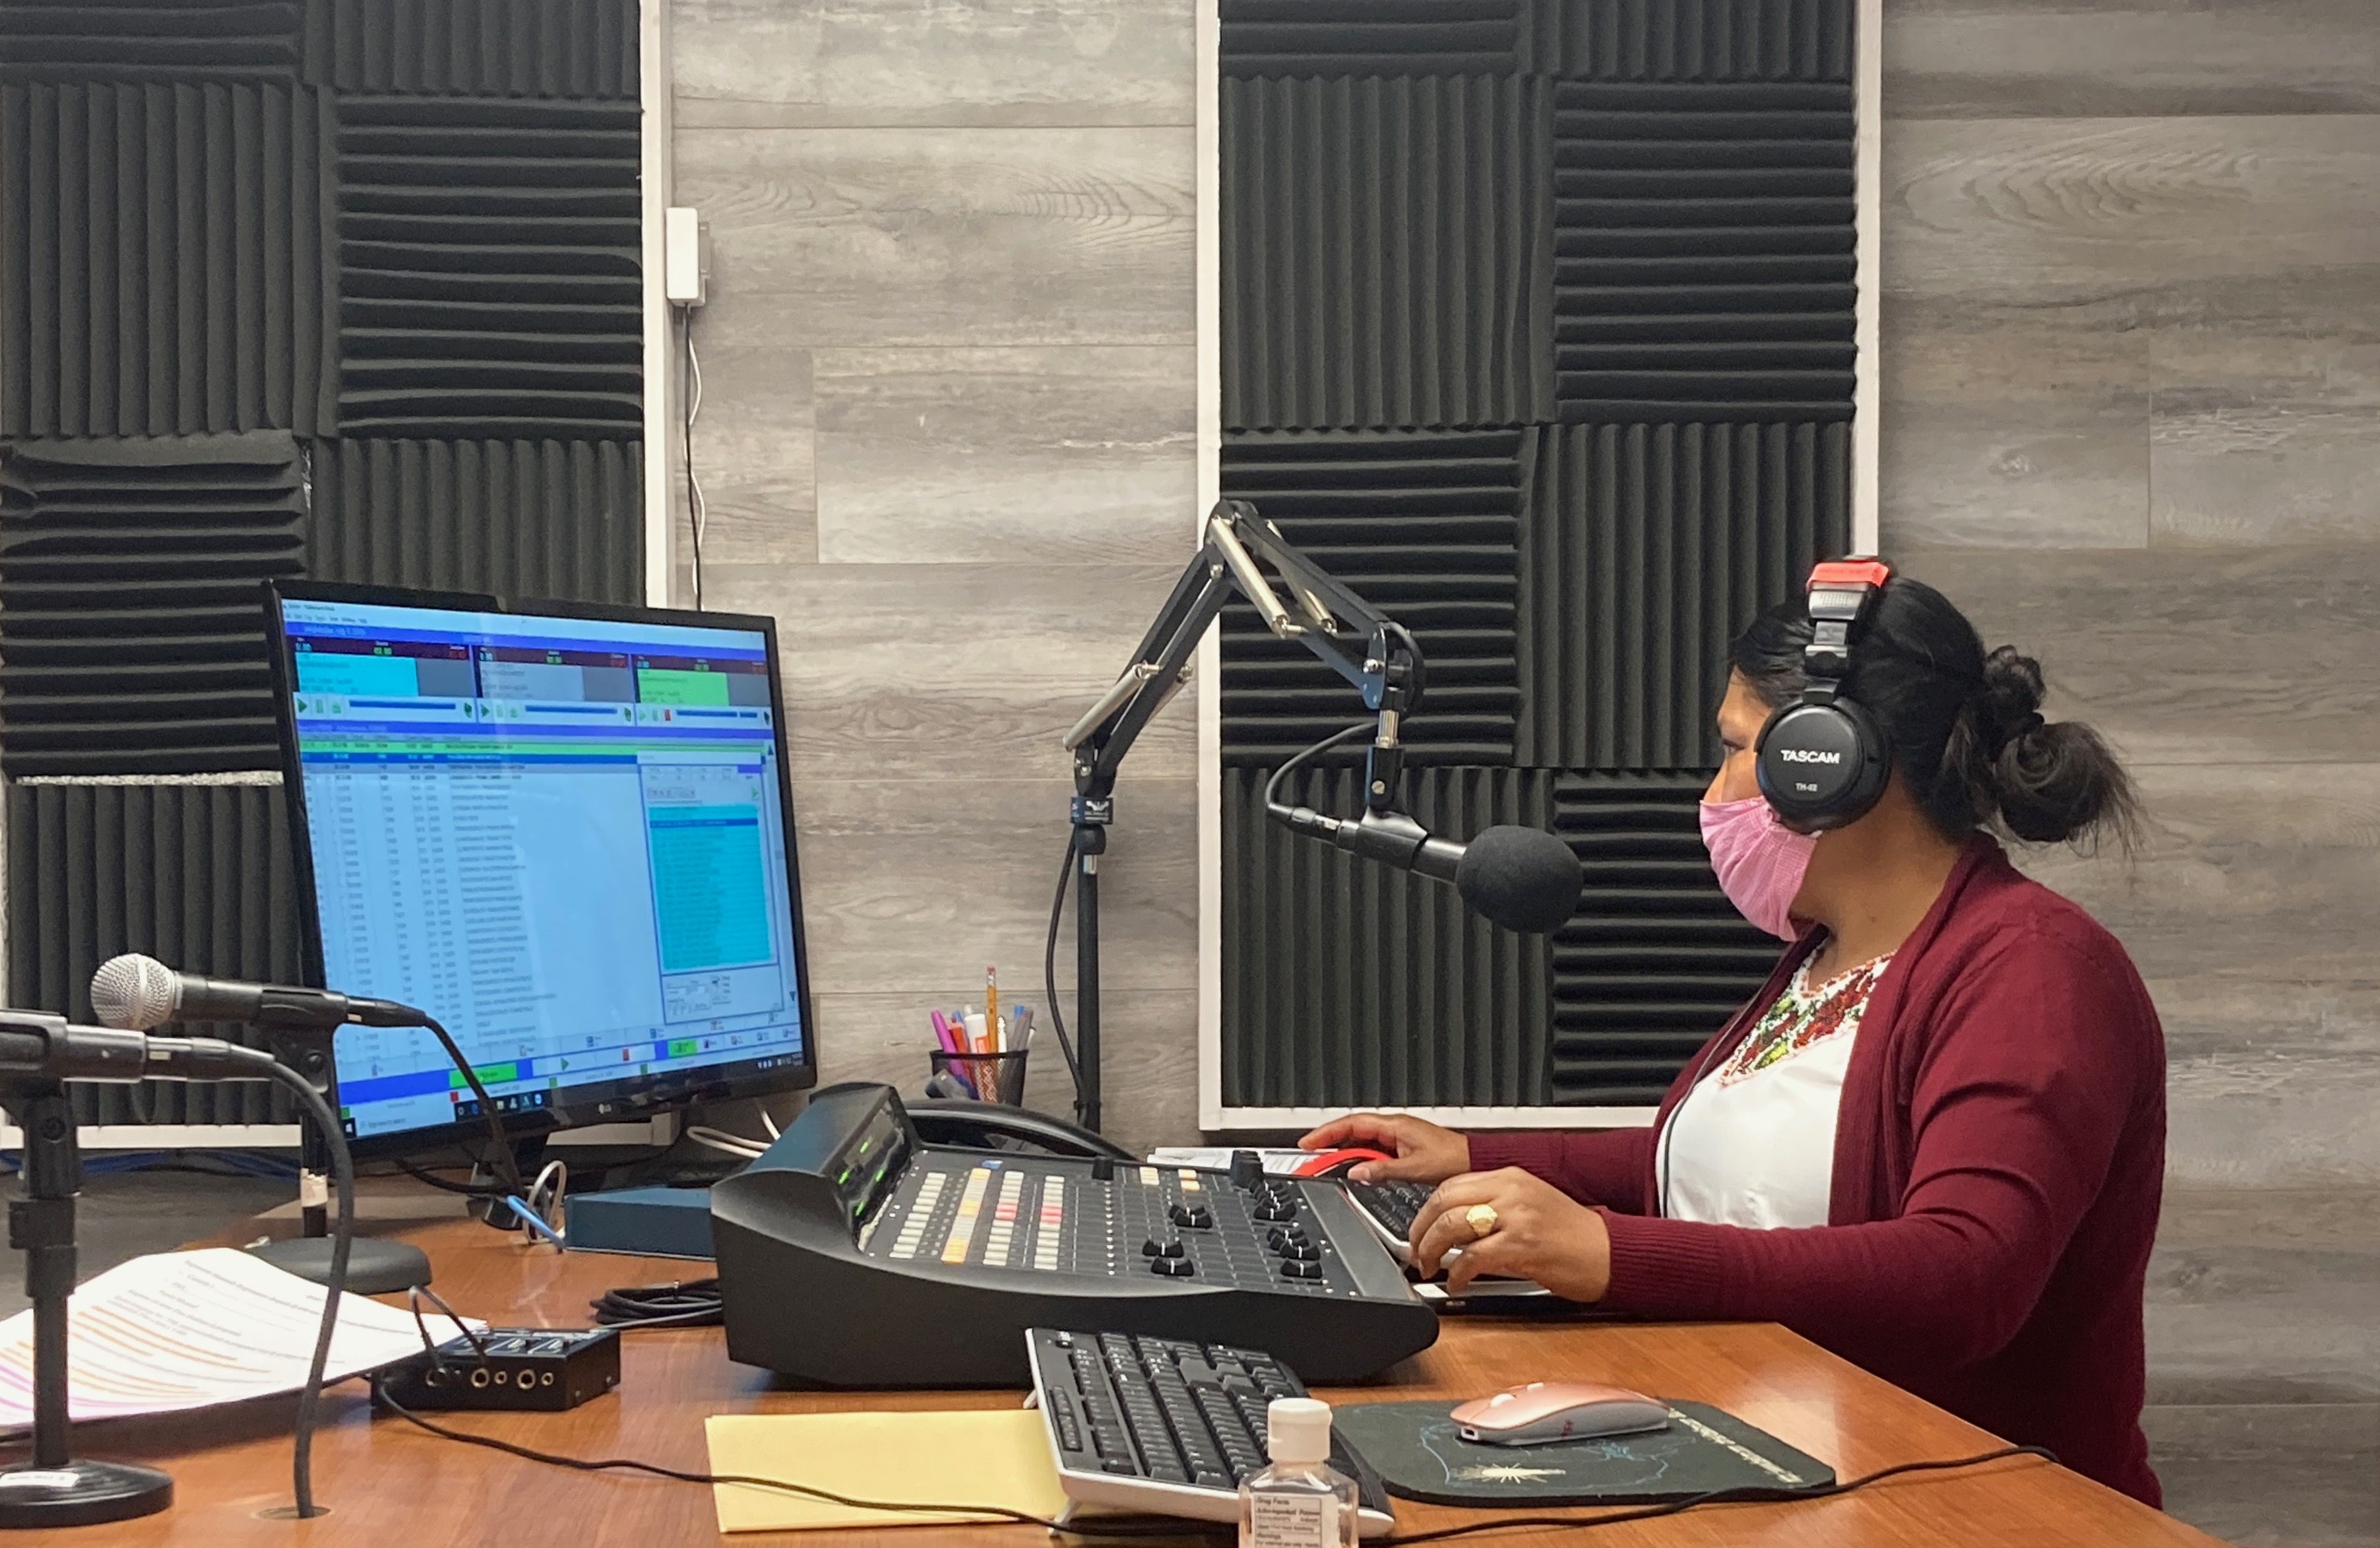 Lidia López prepares her program for Radio Indígena in Oxnard. Image by Julia Knoerr. United States, 2020.